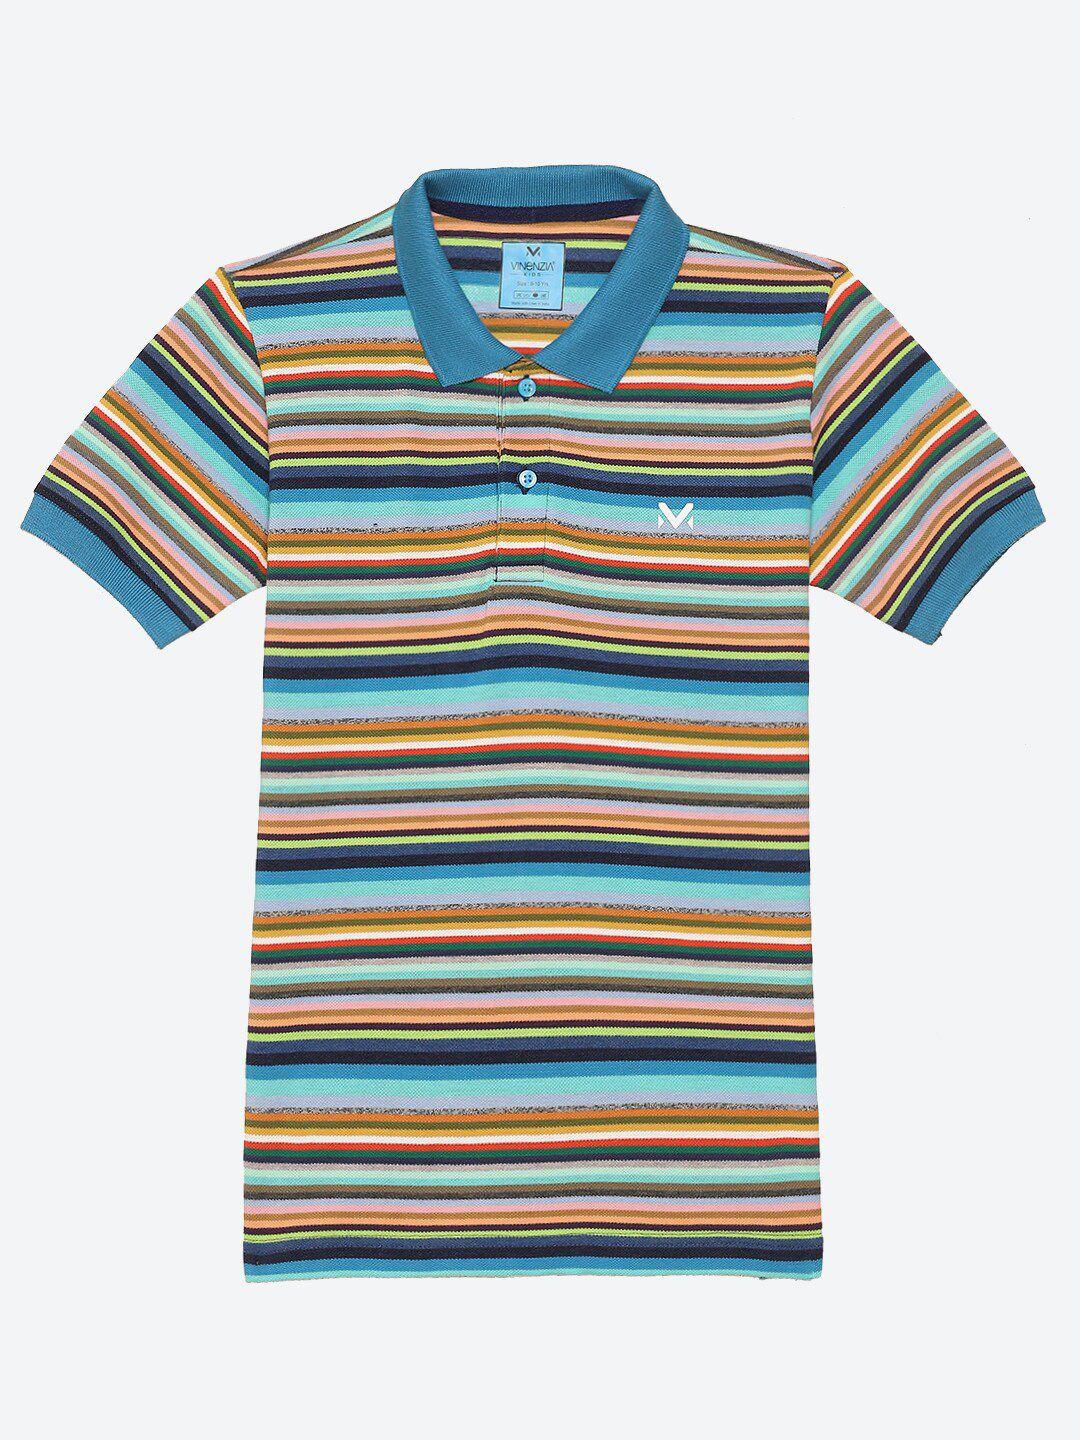 vinenzia boys blue striped t-shirt